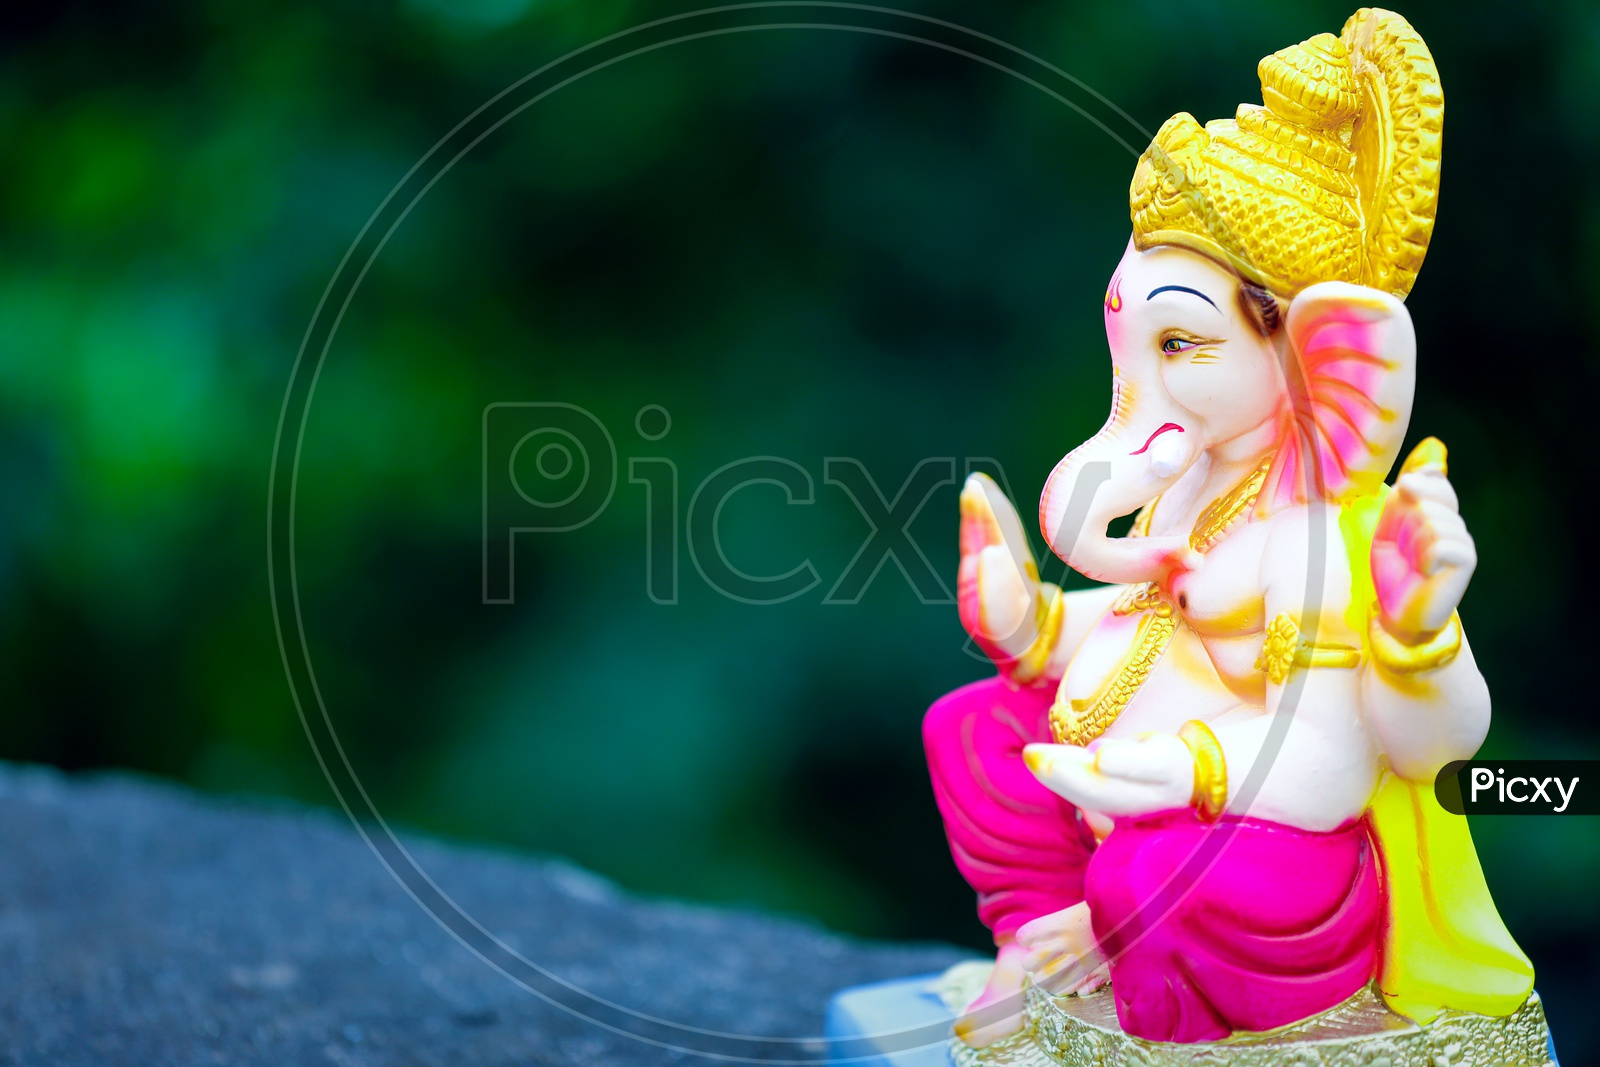 Image of Lord Ganesh Idol with beautiful Greenery / Ganesha Idol ...